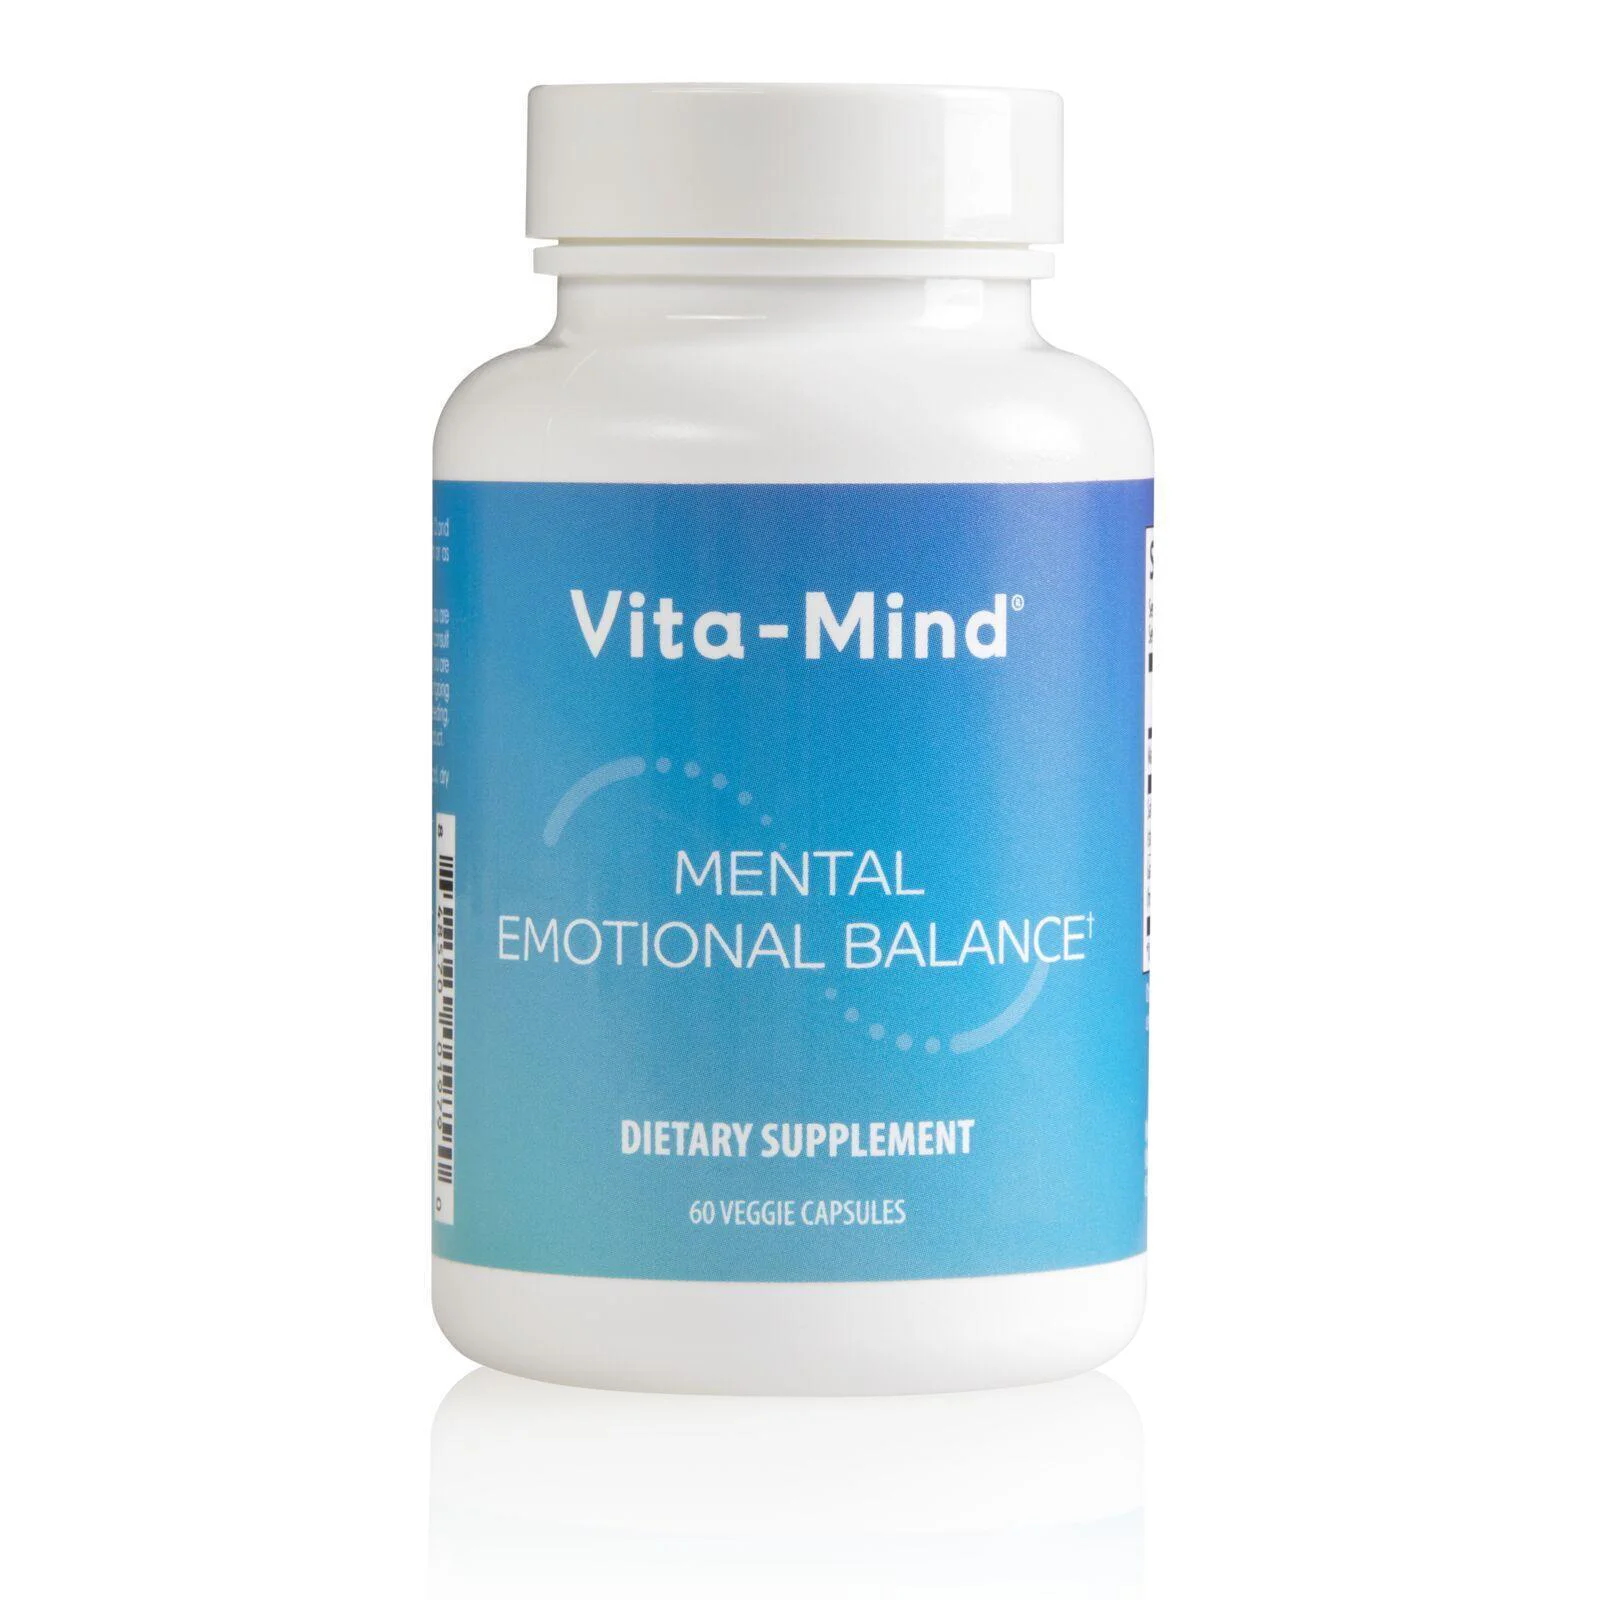 Purchase Vita-Mind Mental Emotional Balance Formula